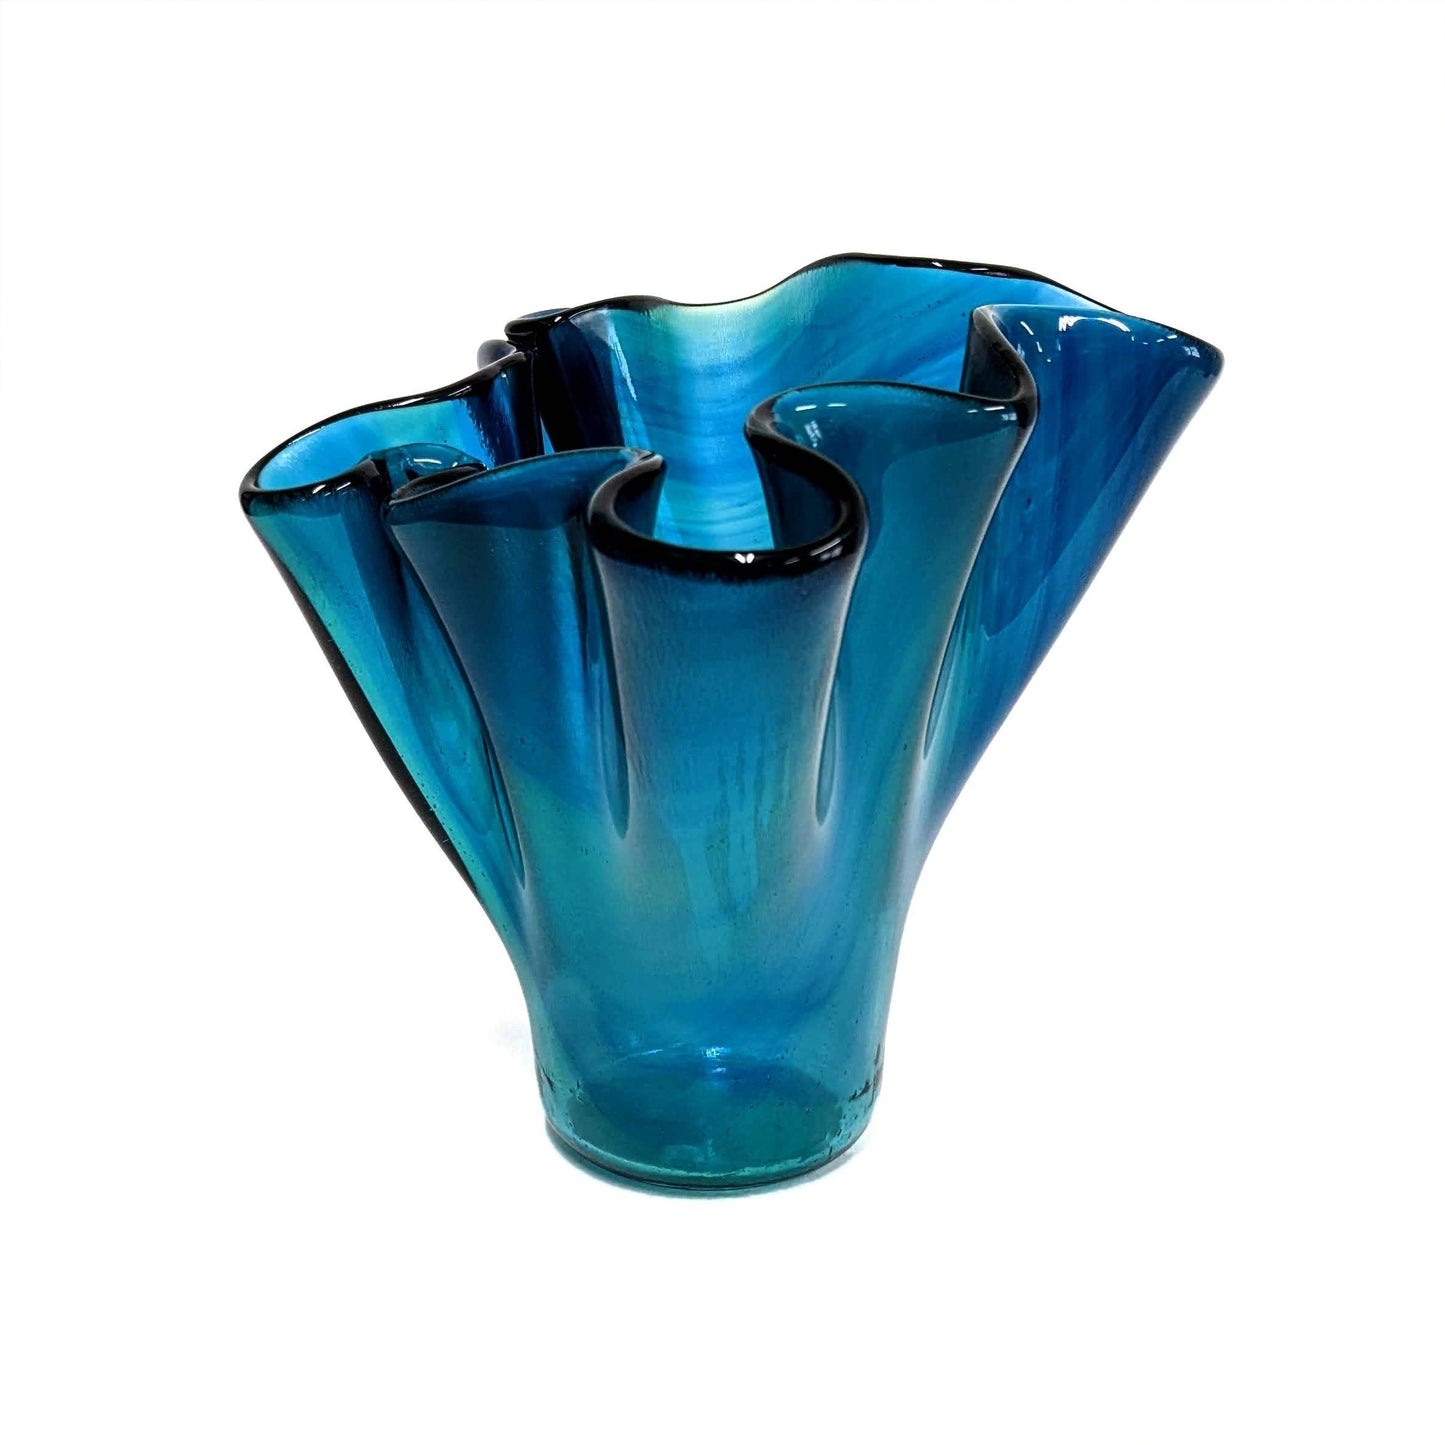 Glass Art Vase in Teal Aqua Turquoise Blue